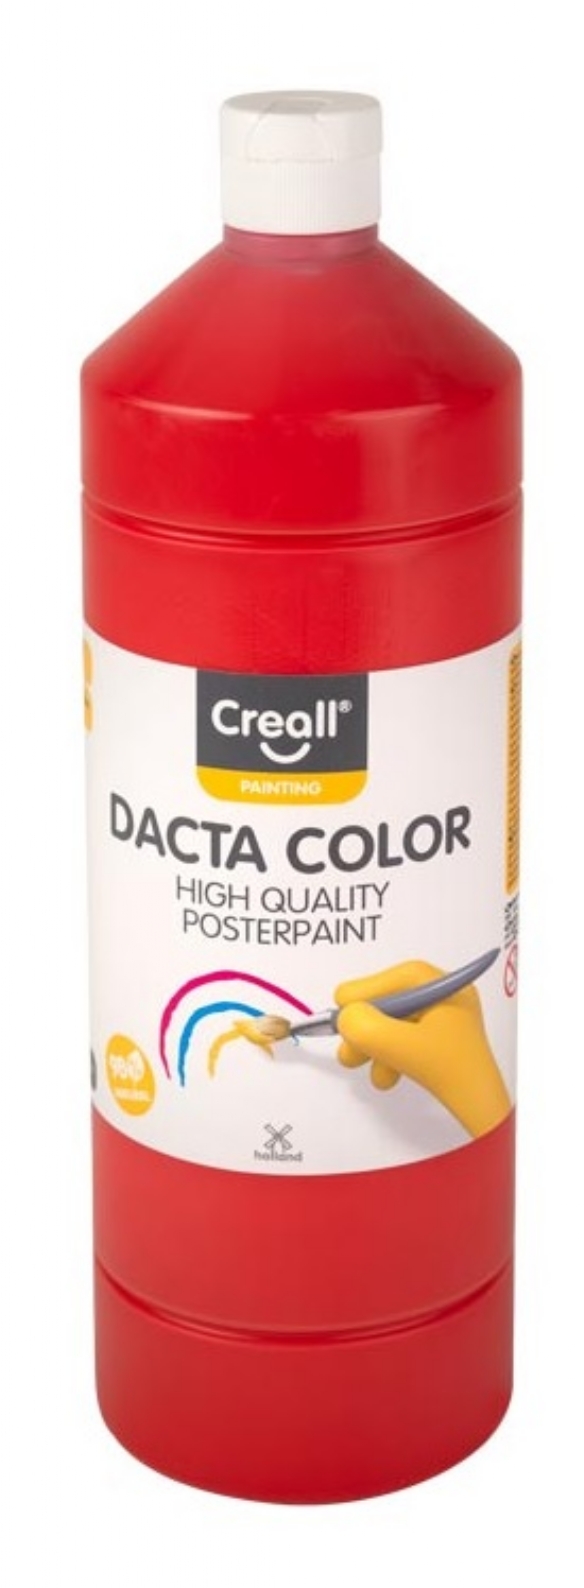 Dacta-color plakkaatverf, 1000 ml, 05 lichtrood